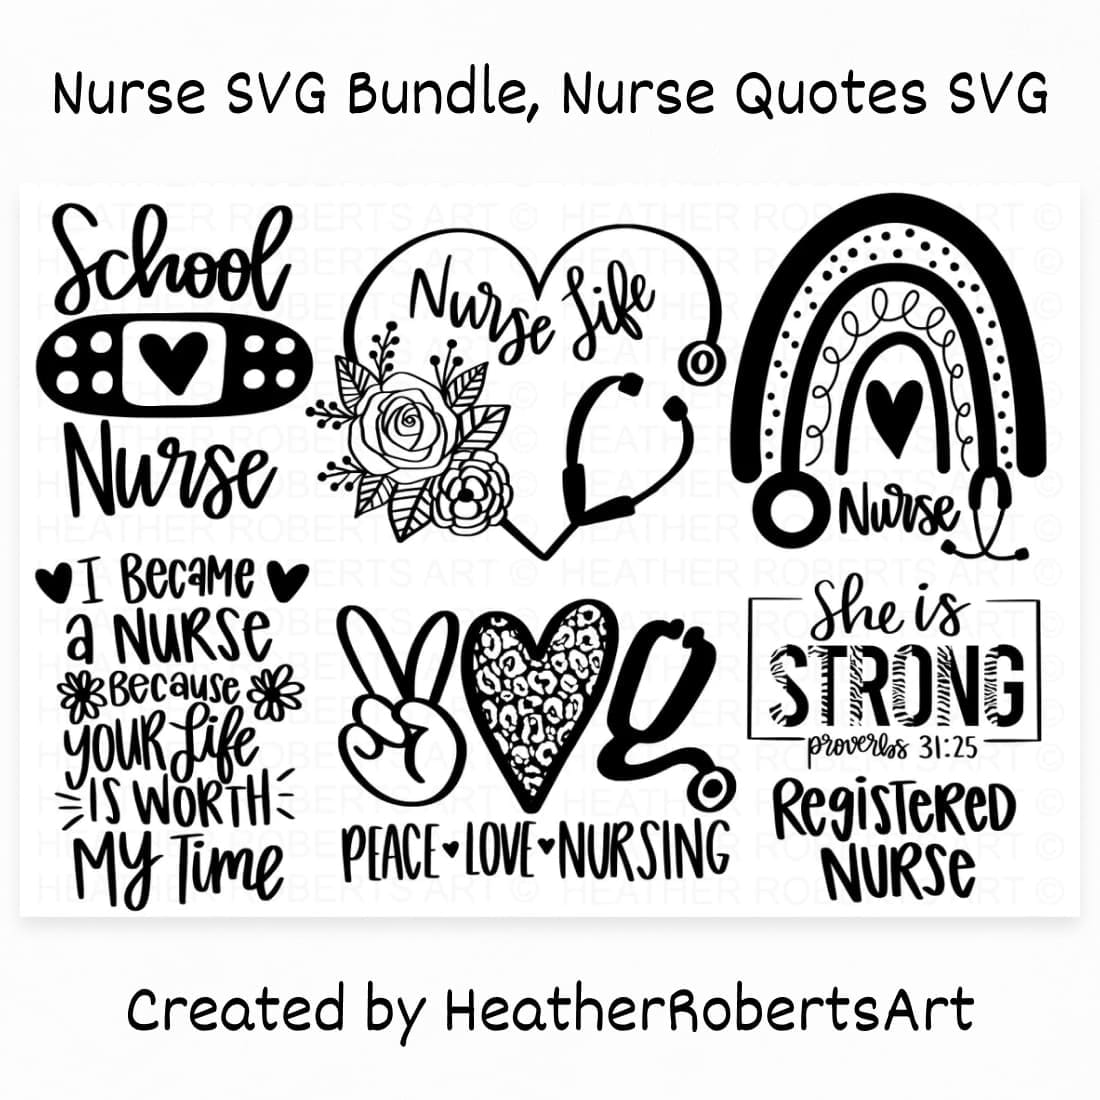 Nurse Quotes SVG main cover.